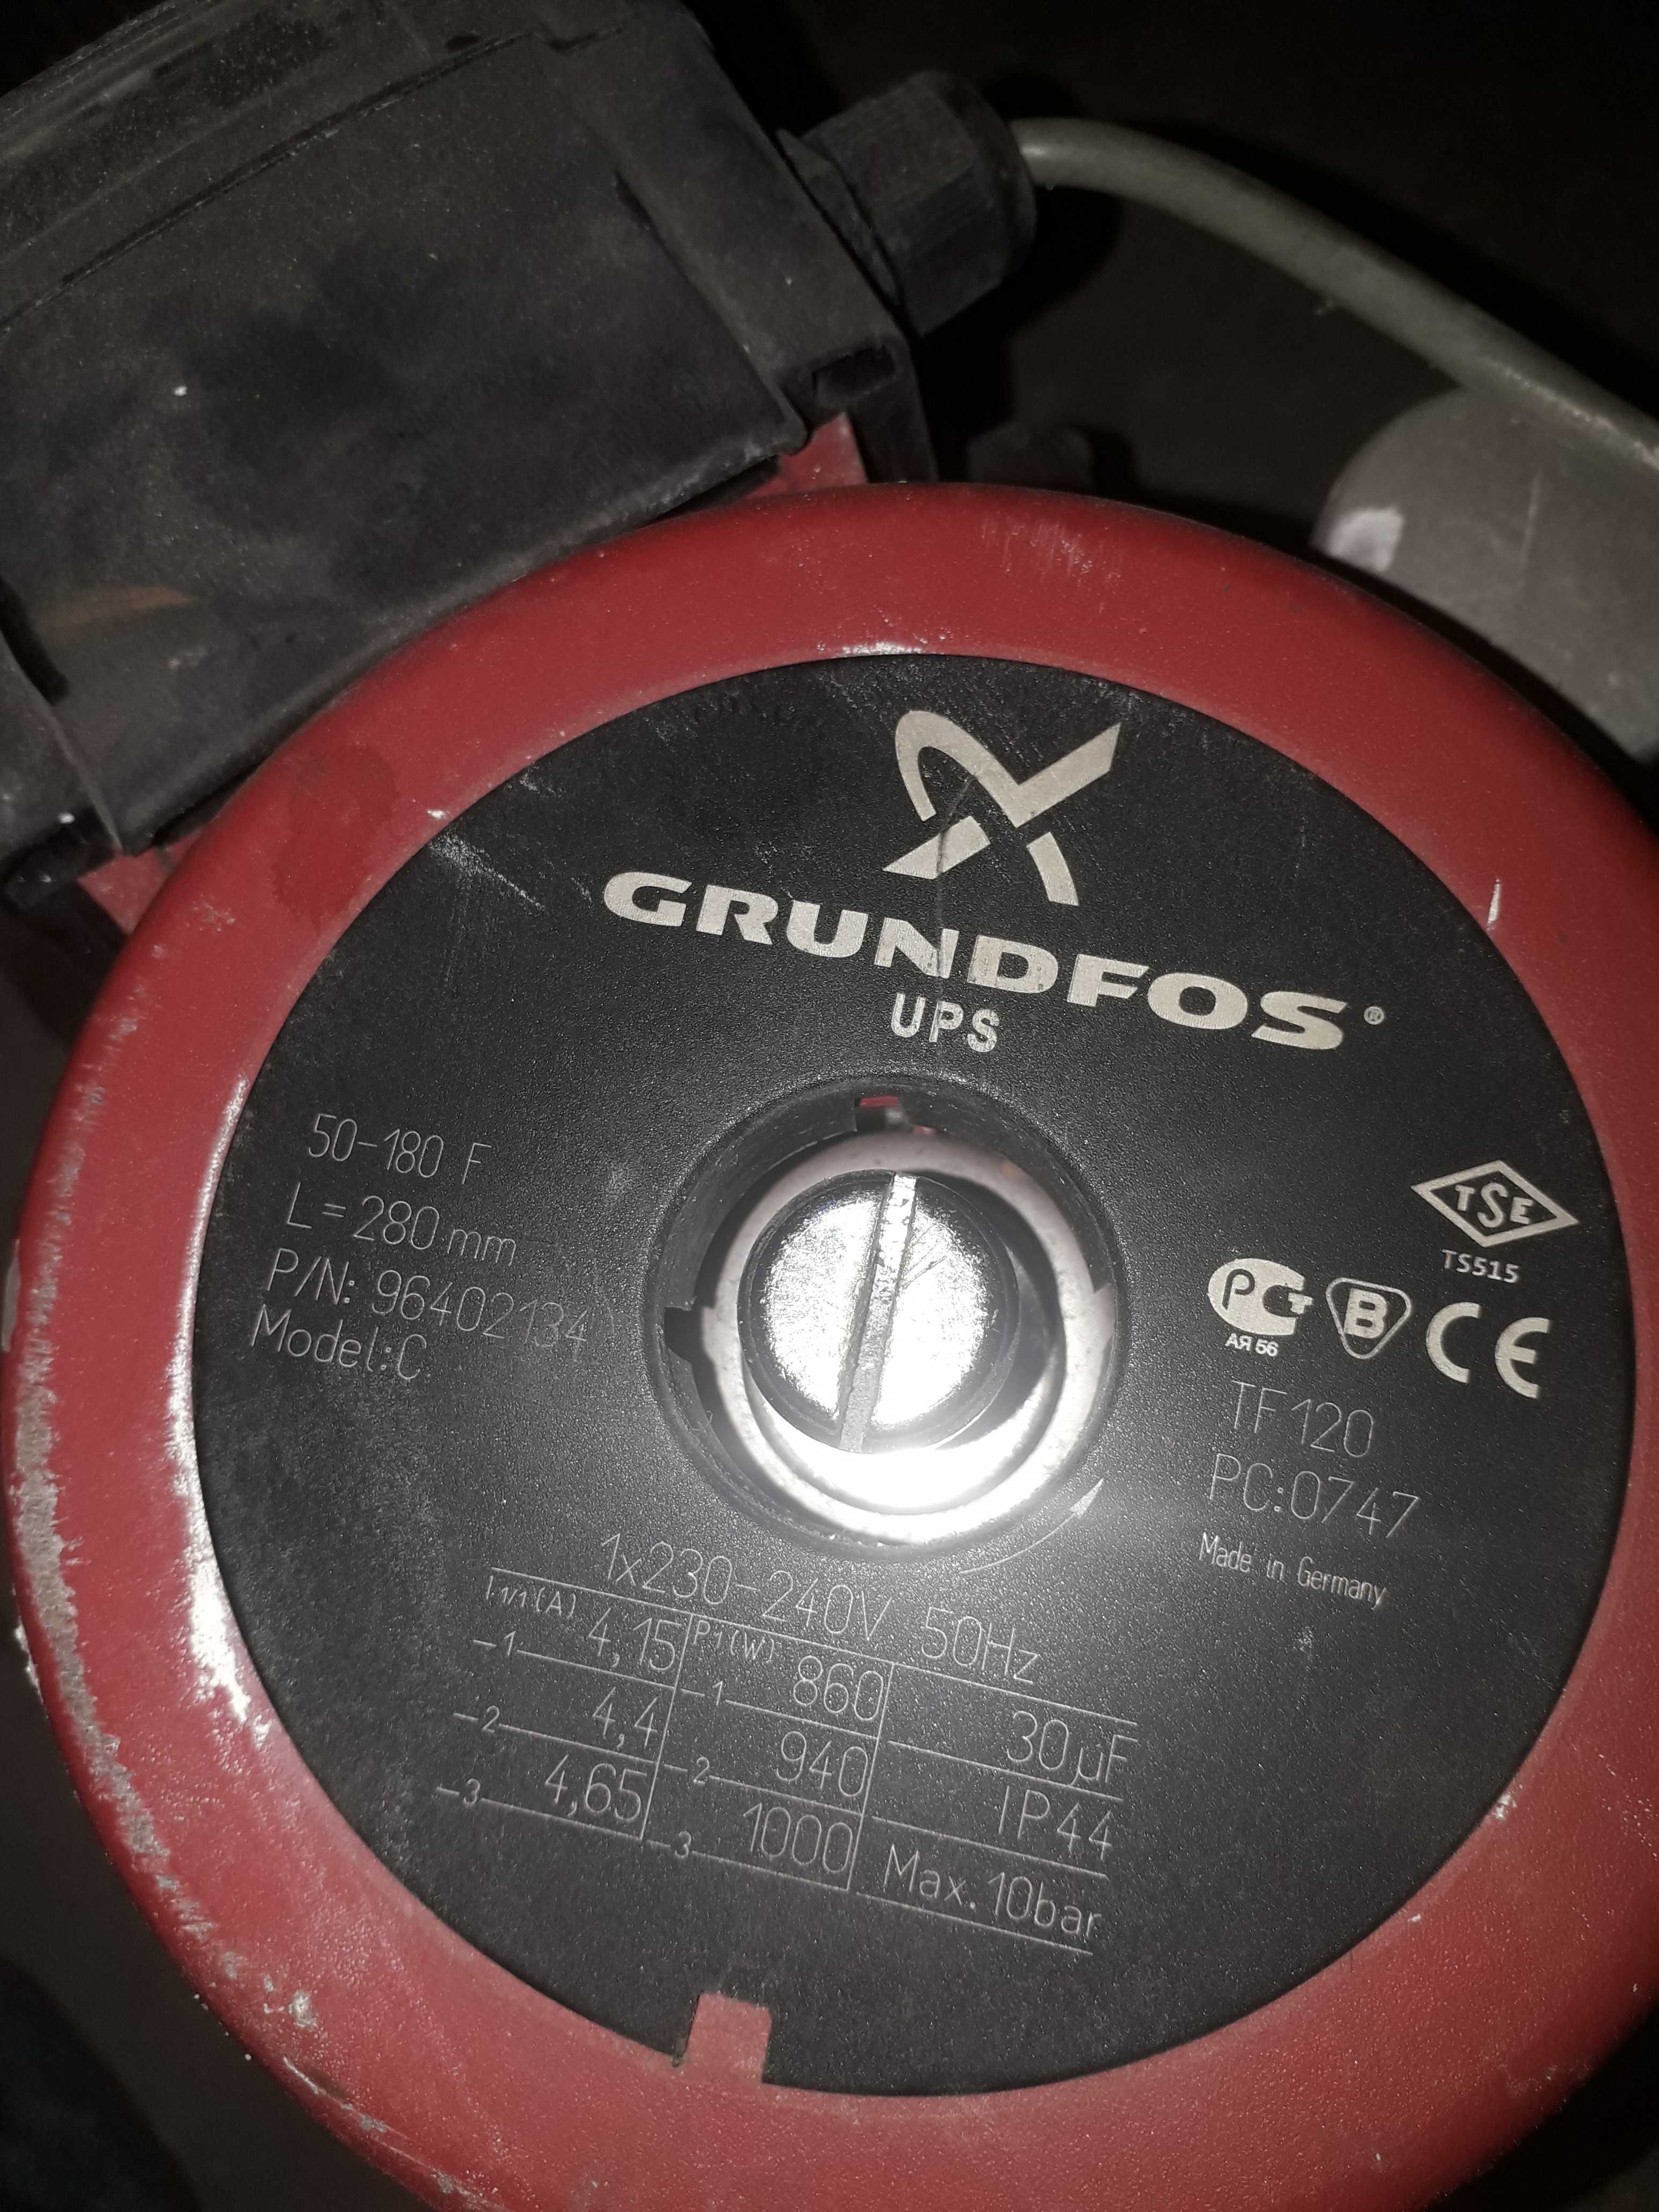 Pompa Grundfos ups 50-180F model C 230v